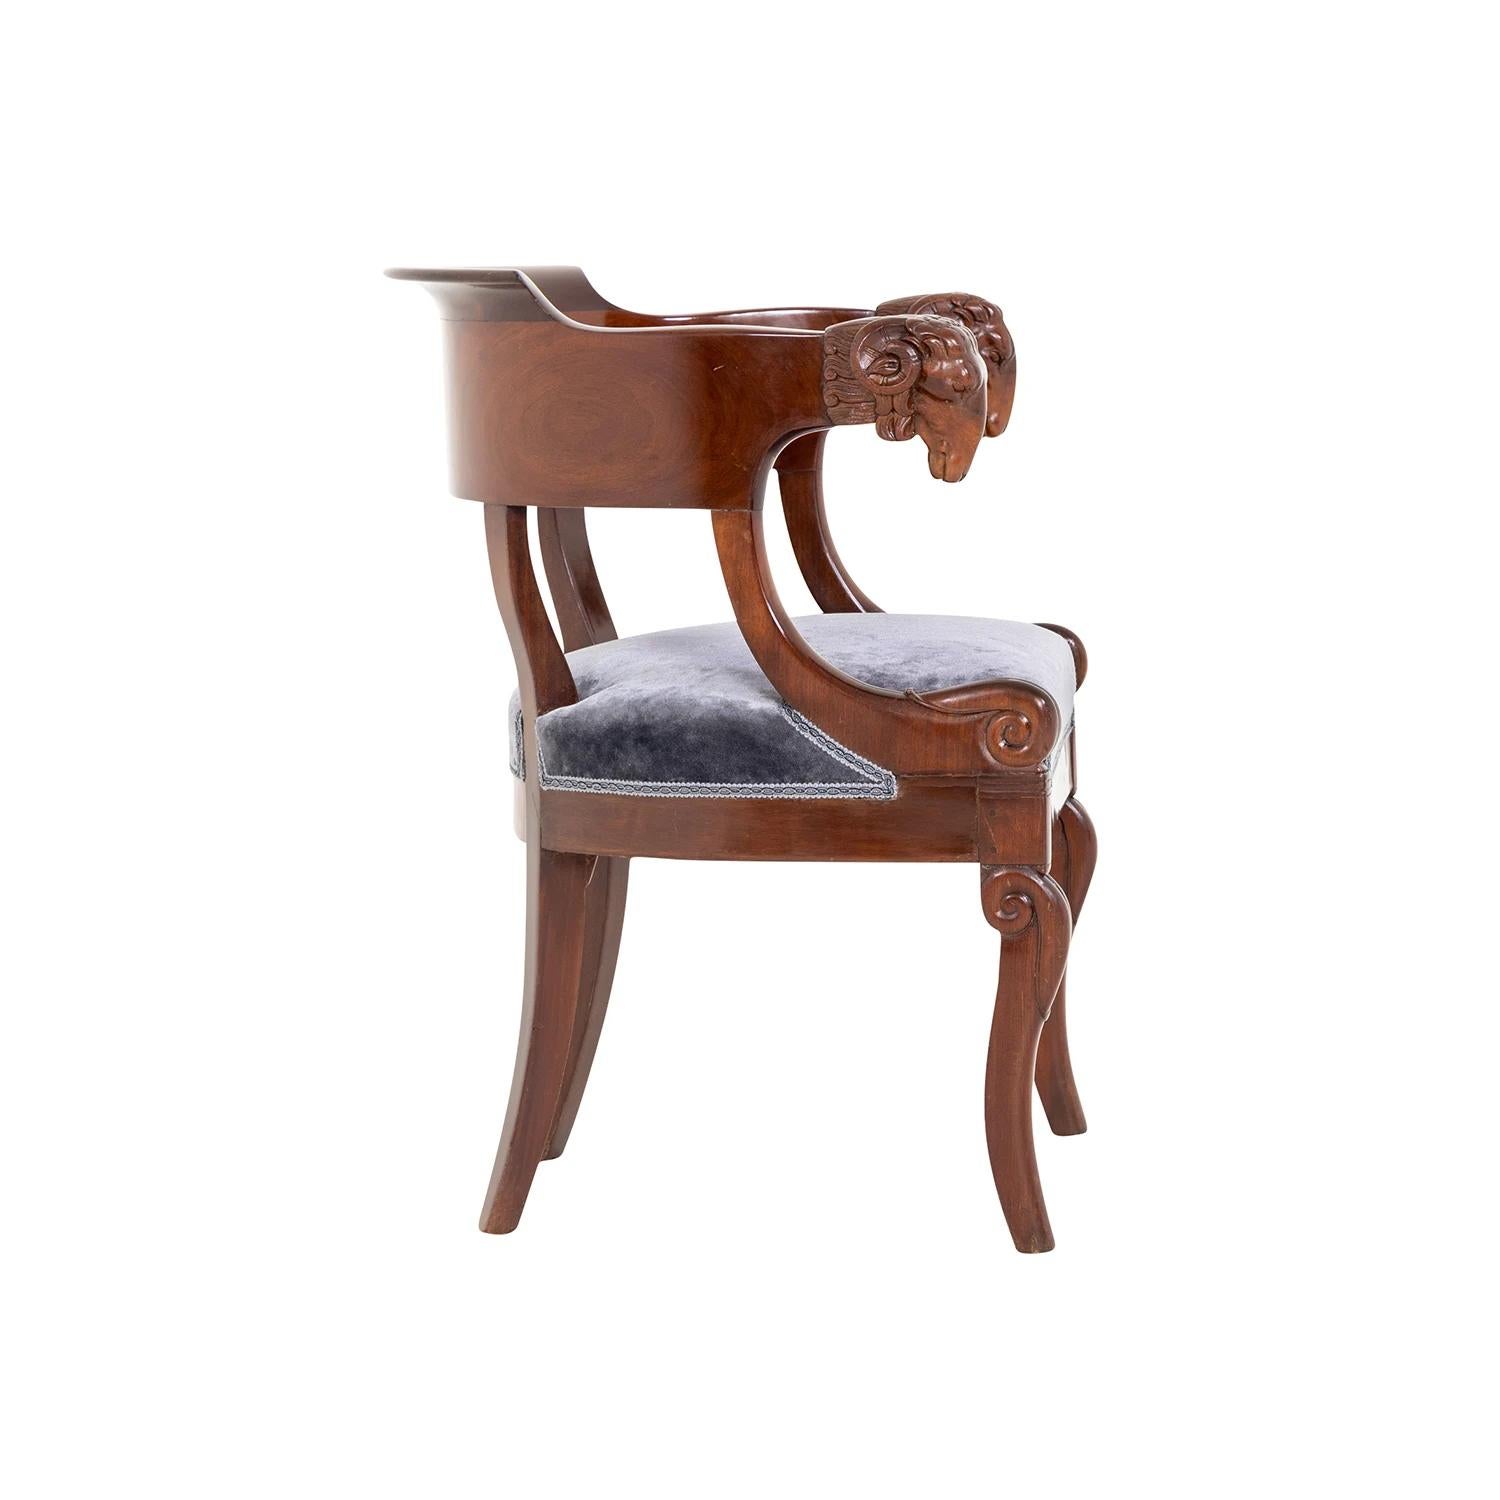 19th Century German Biedermeier Polished Mahogany Armchair - Antique Side Chair For Sale 1